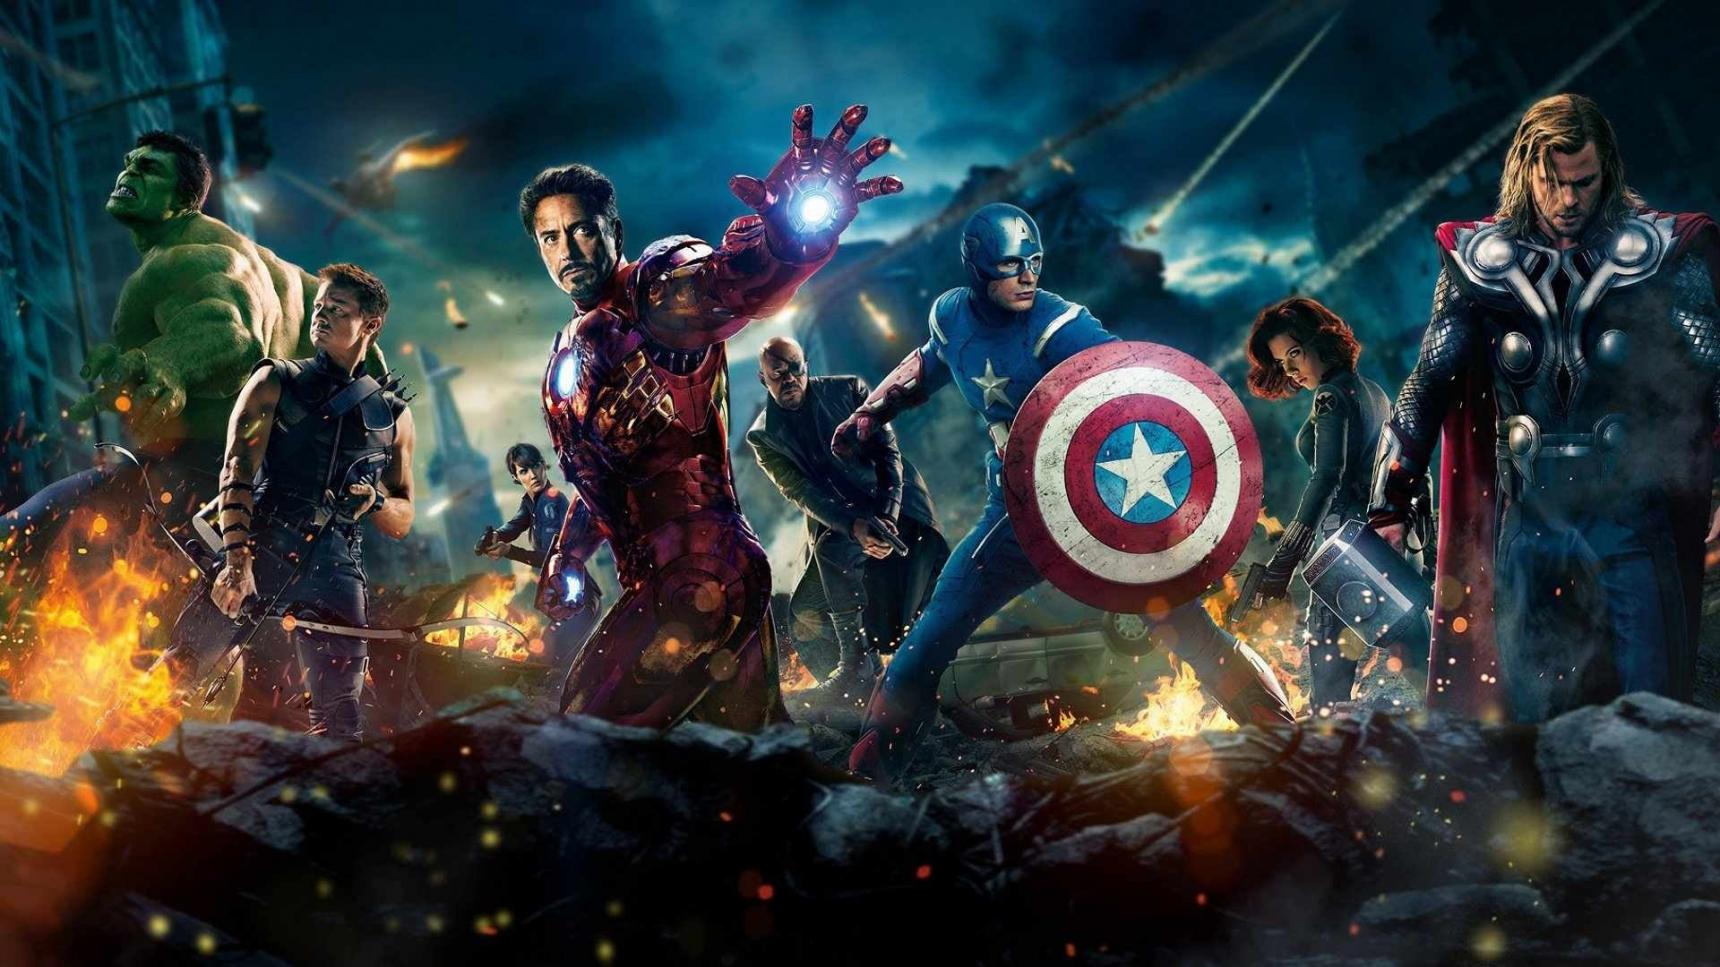 Fondo de pantalla de la película The Avengers (Los vengadores) en PELISPEDIA gratis